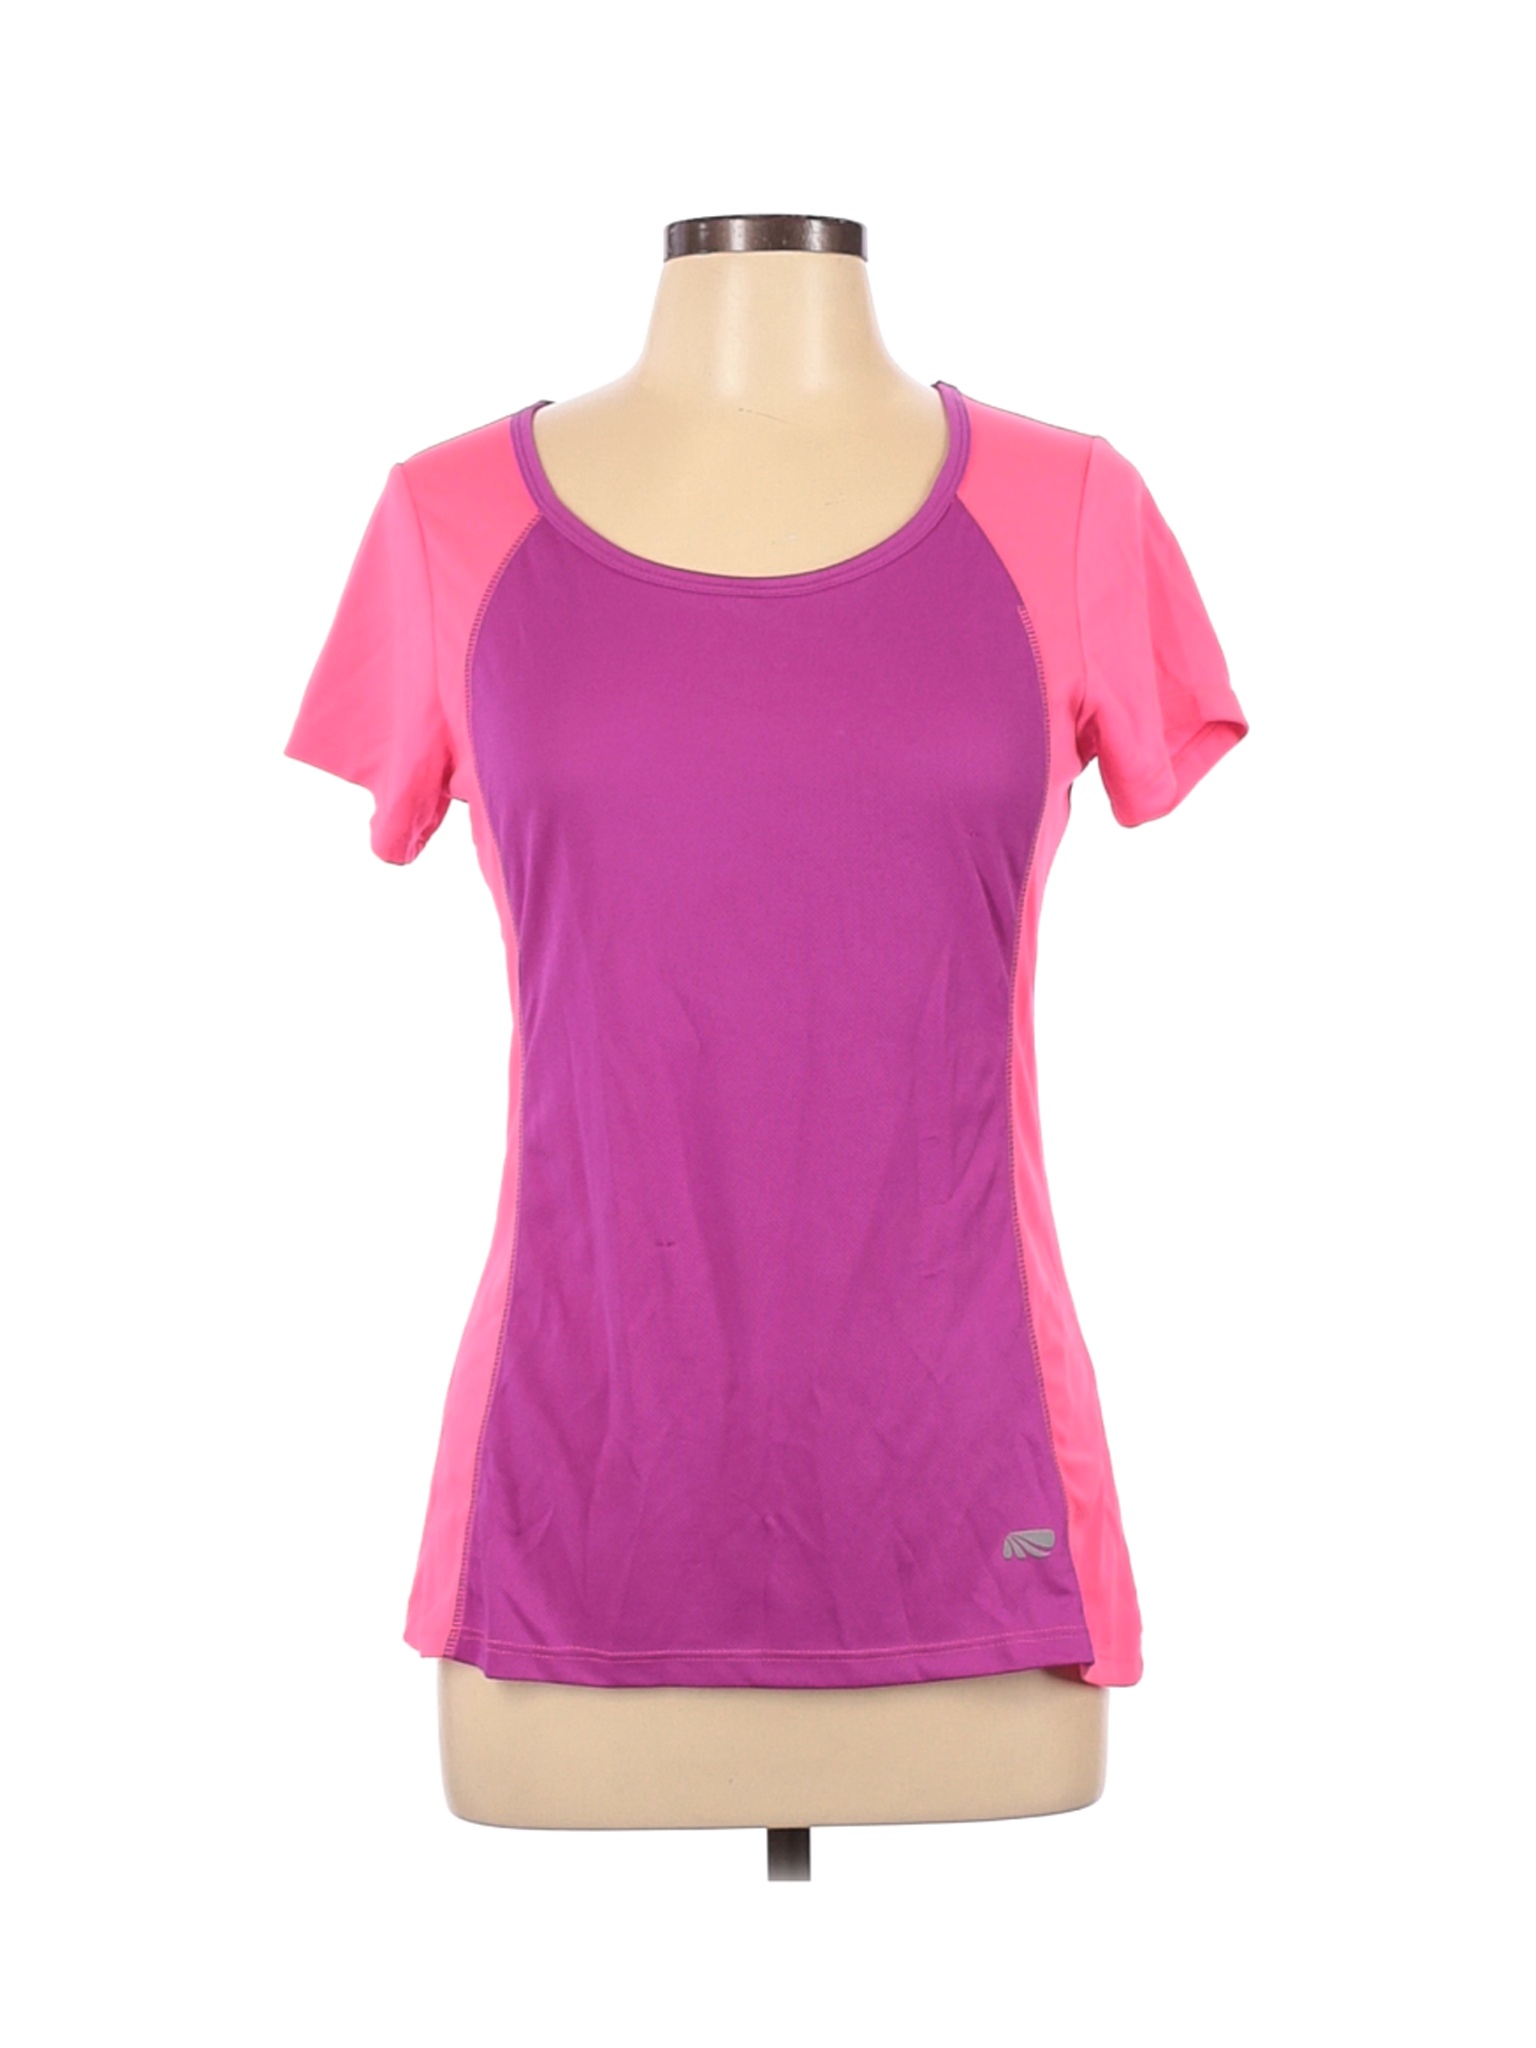 Marika Tek Women Purple Active T-Shirt L | eBay